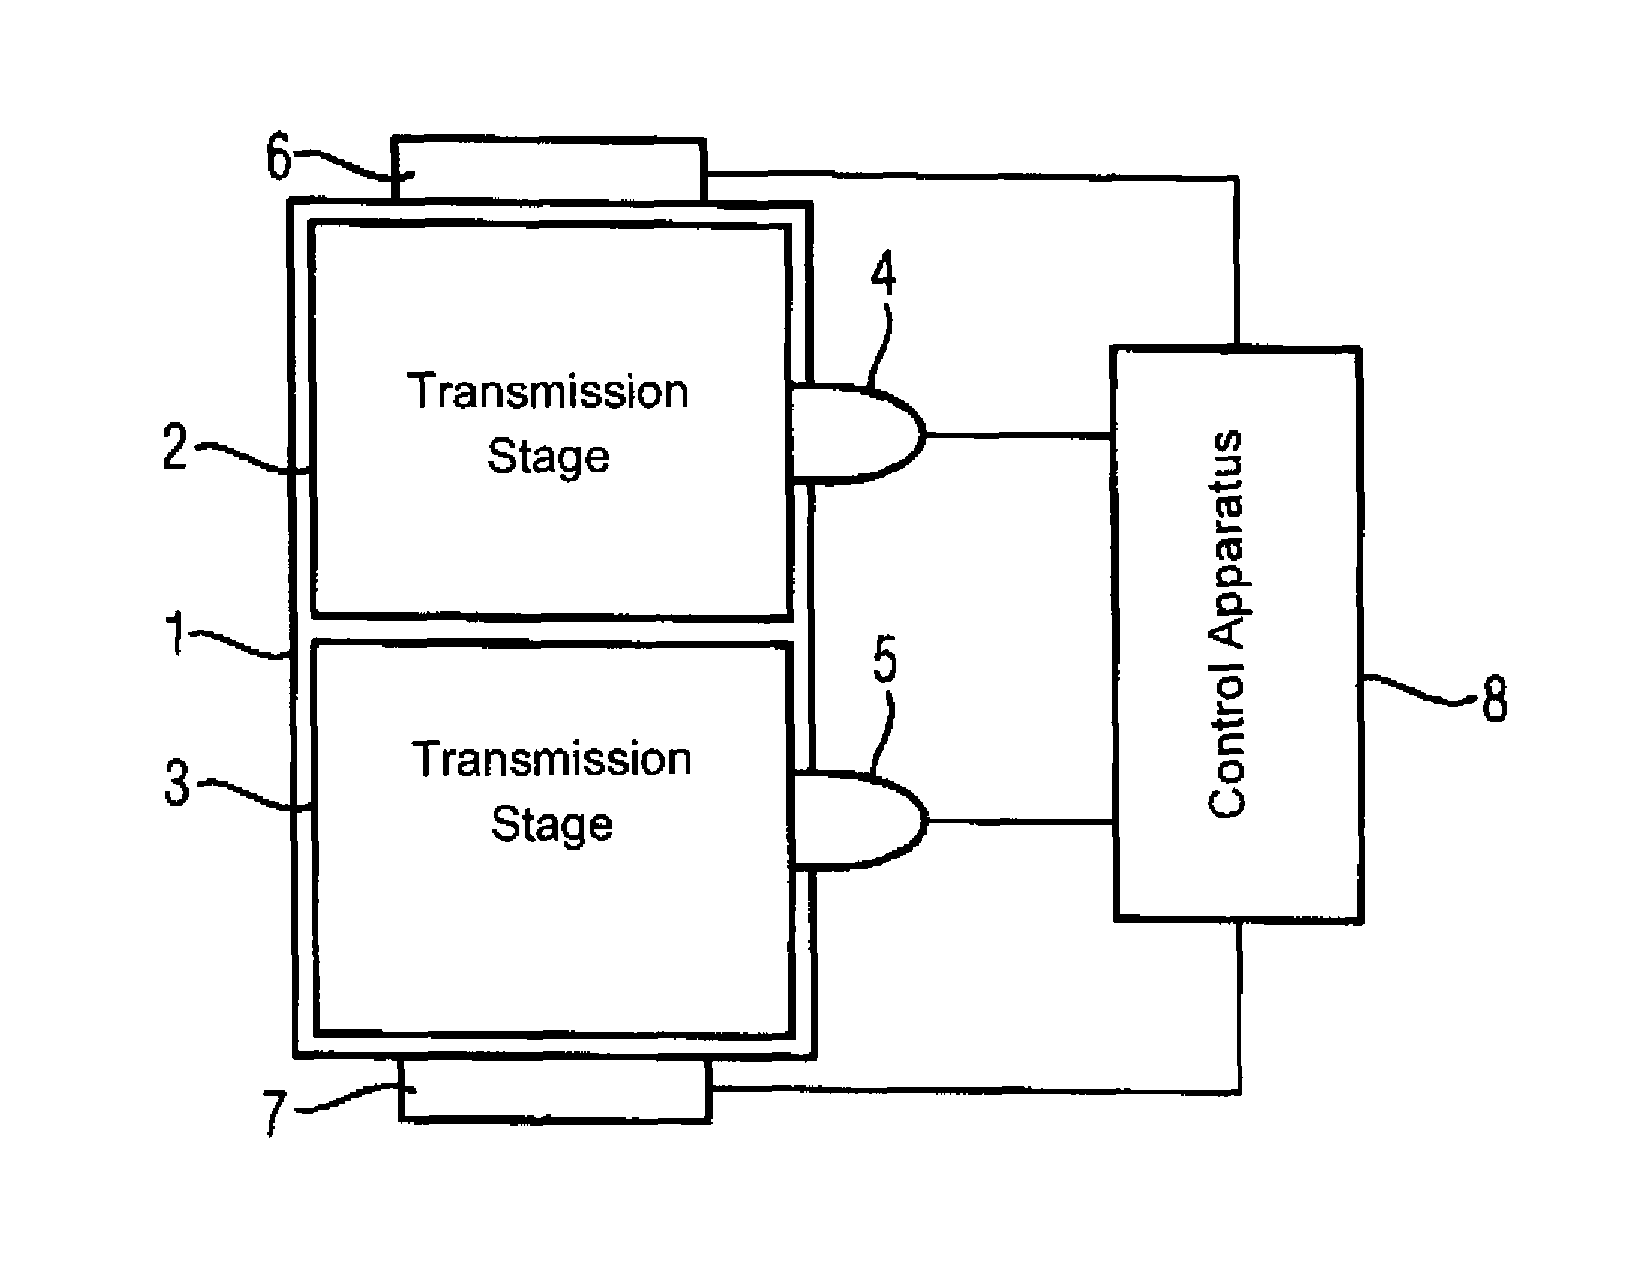 Method for identifying damage on transmissions